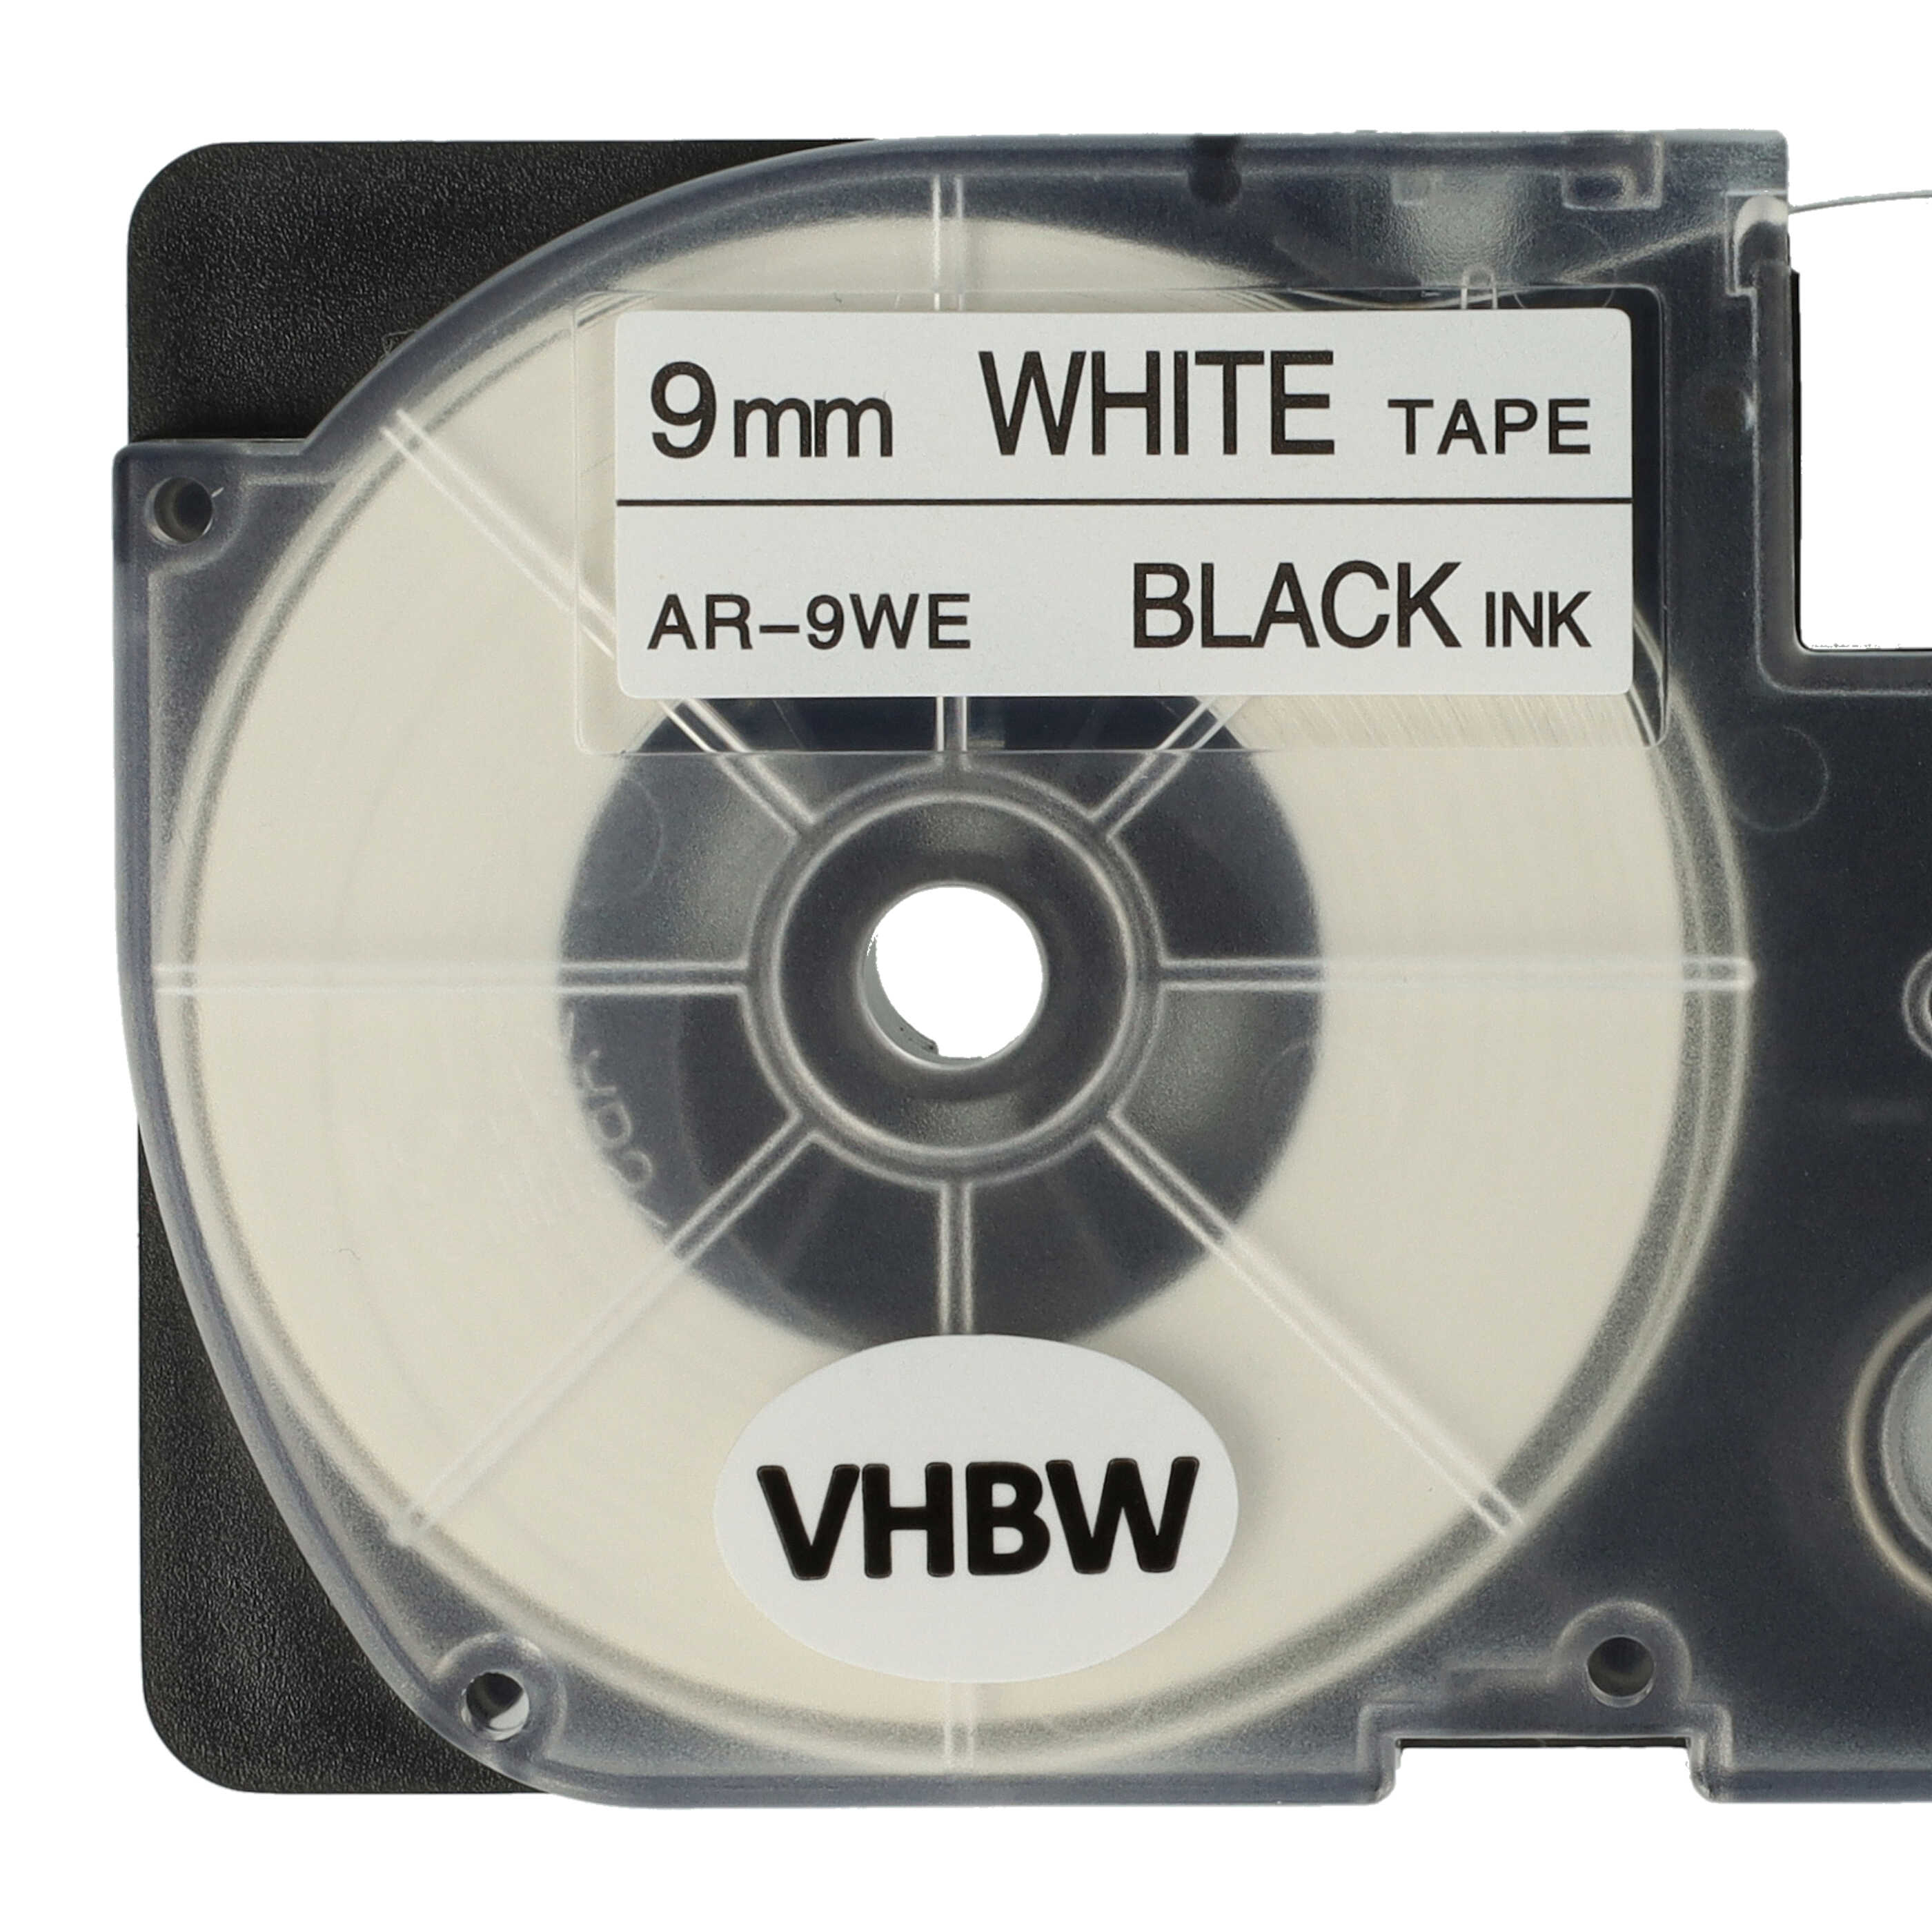 Cassetta nastro sostituisce Casio XR-9WE1, XR-9WE per etichettatrice Casio 9mm nero su bianco